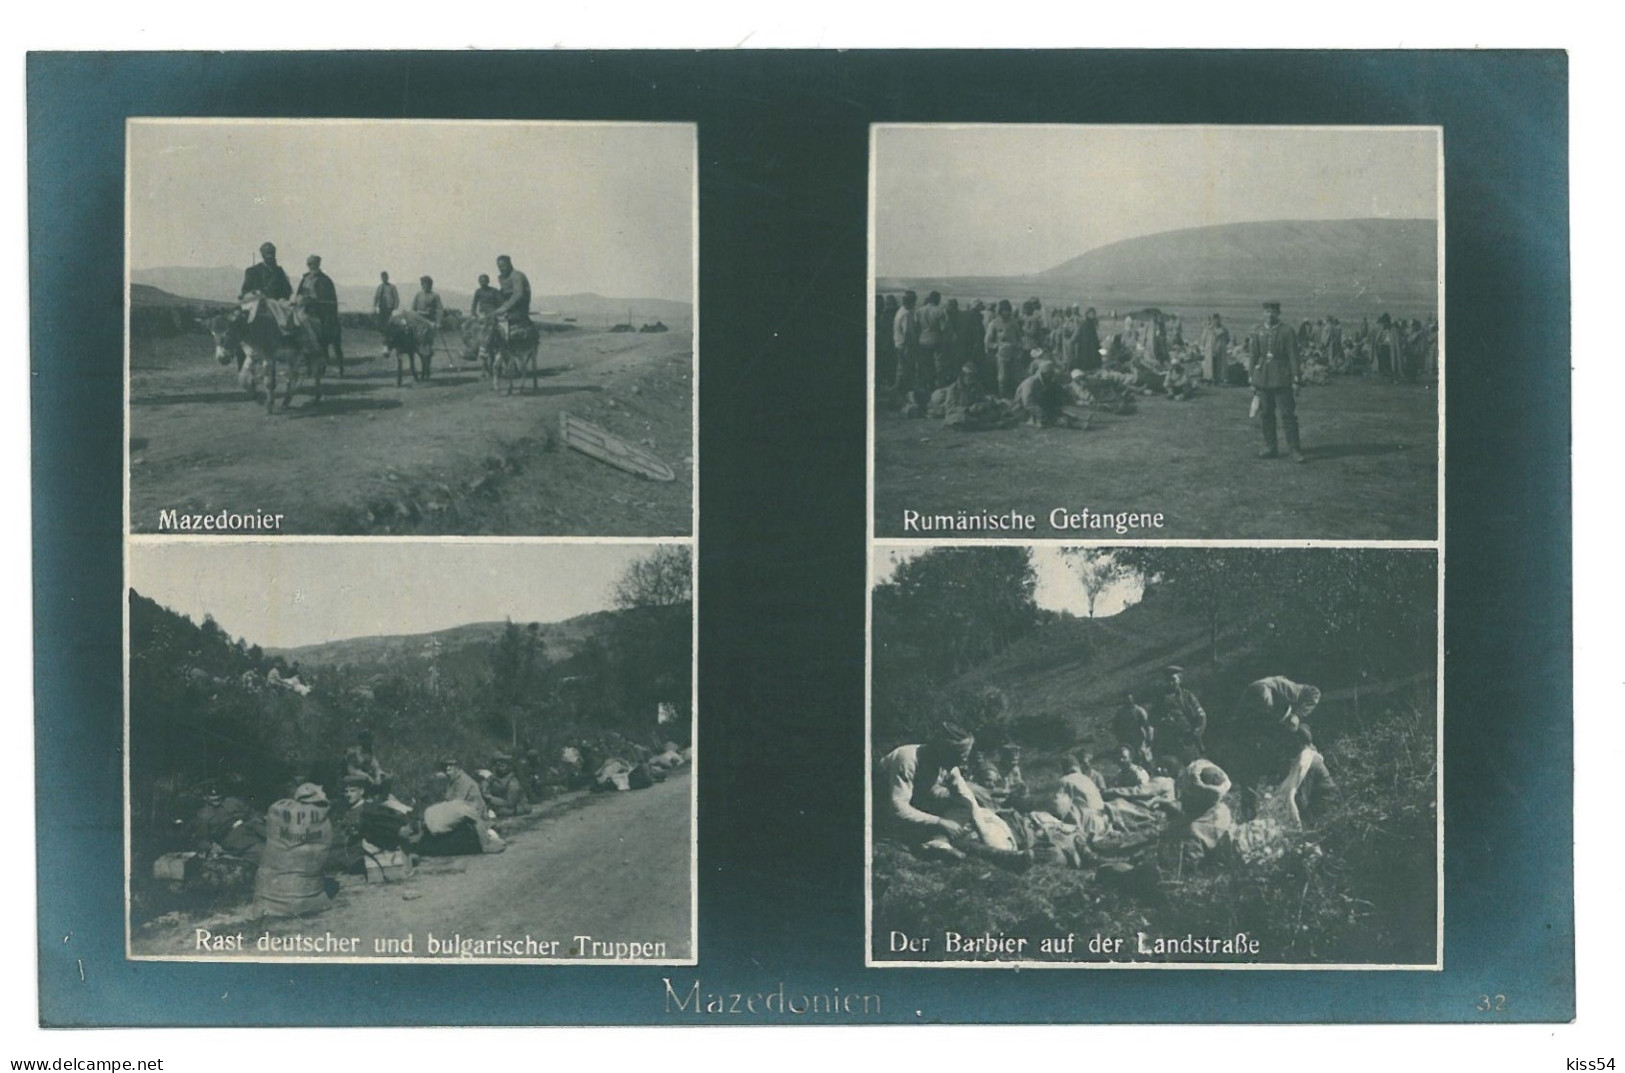 RO 36 - 20333 ROMANIAN Prisoners, Bulgarians, Macedonians - Old Postcard, Real PHOTO - Unused - Rumänien